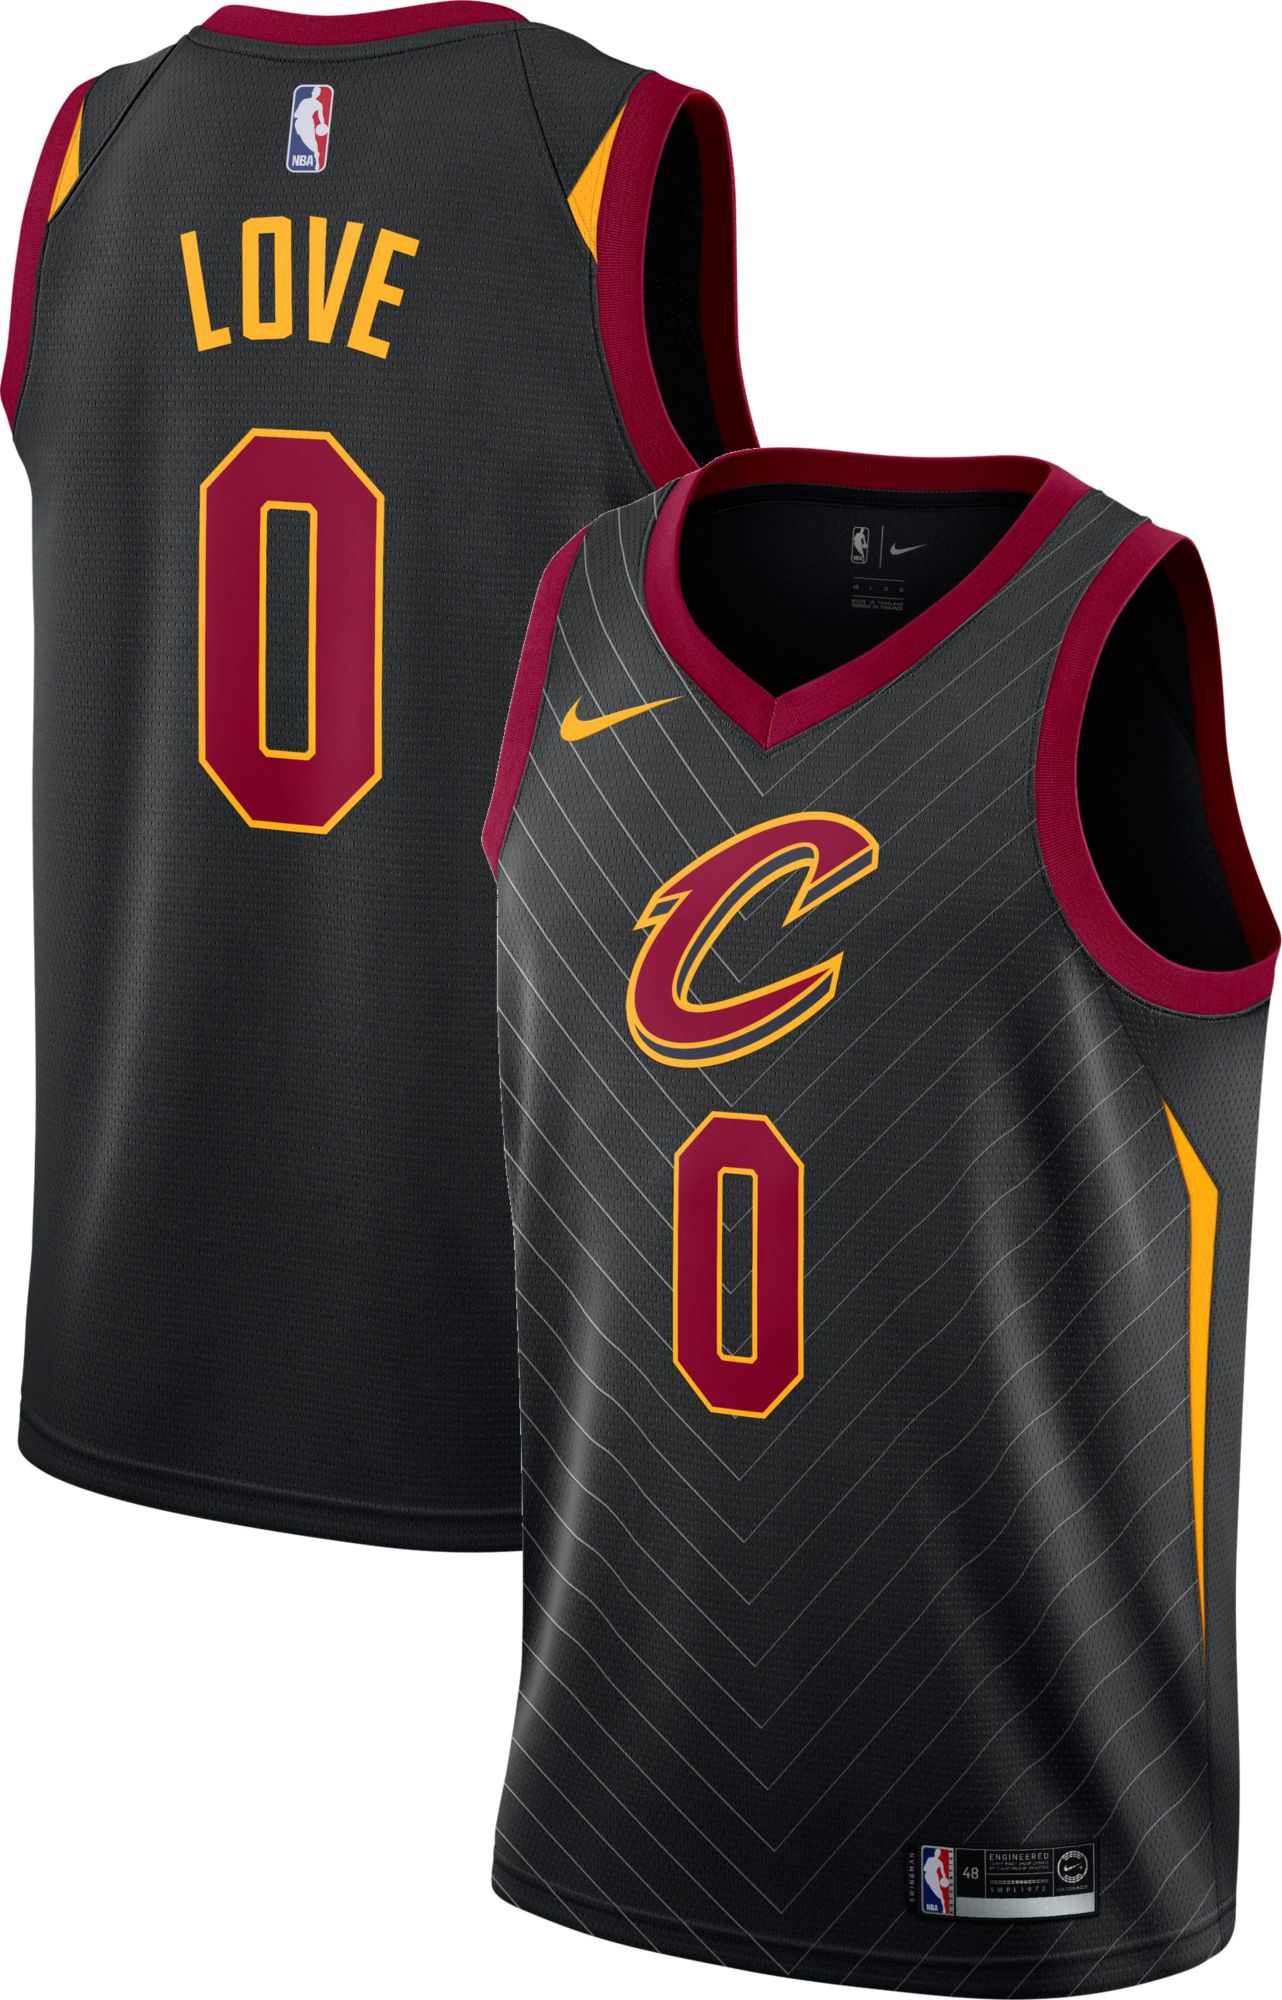 cleveland cavaliers jersey design 2019